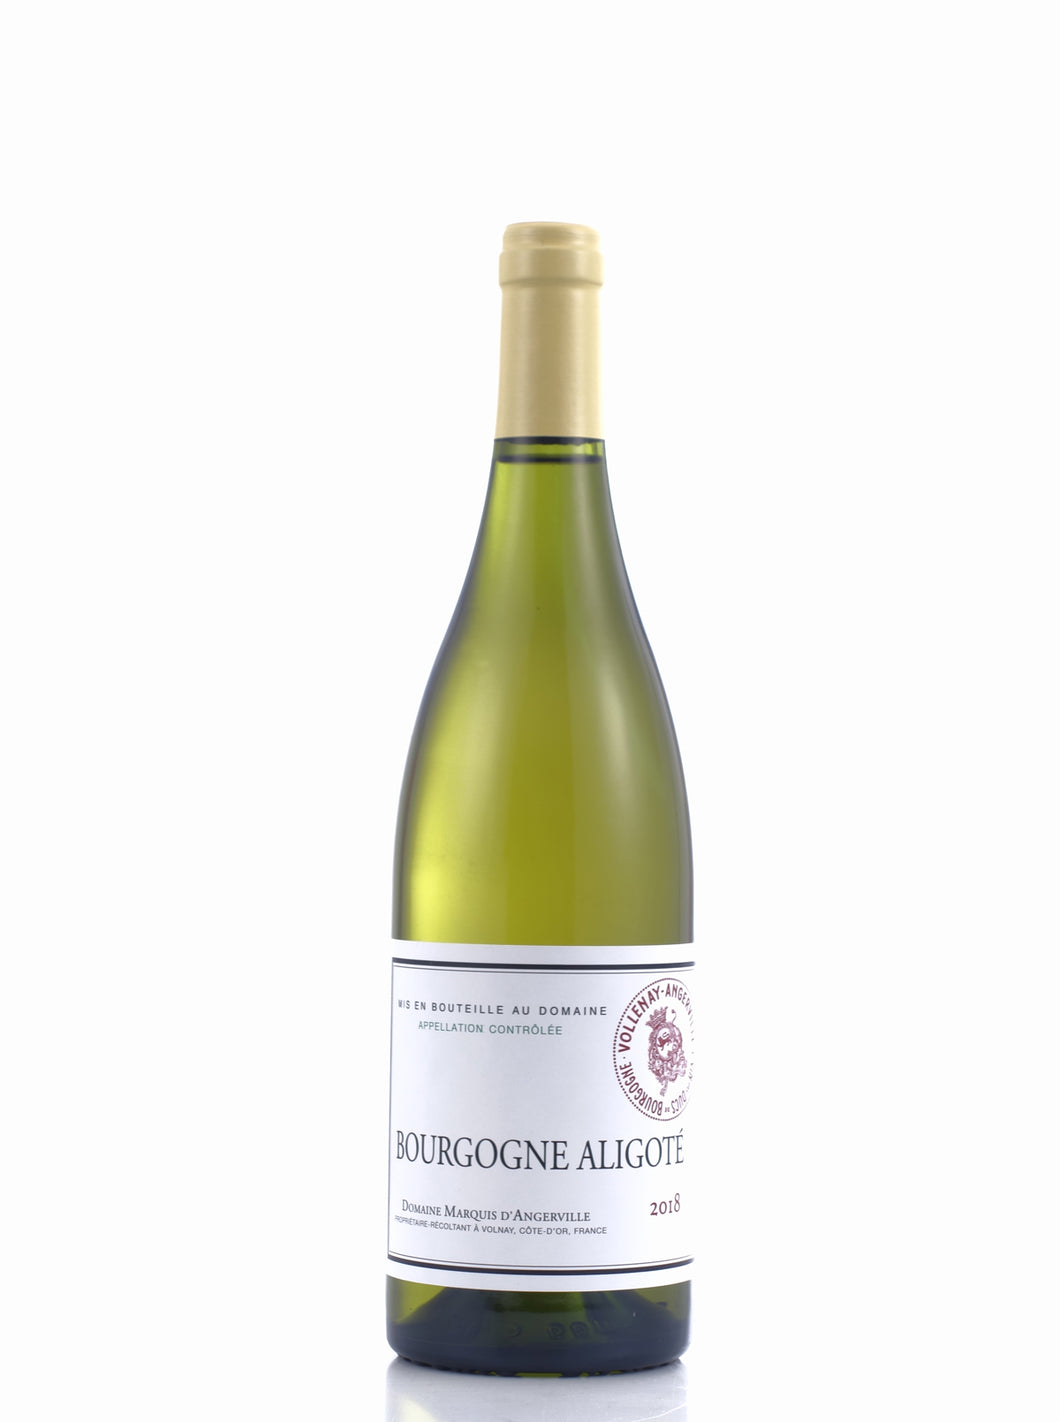 2018 Bourgogne Aligote, Marquis d'Angerville